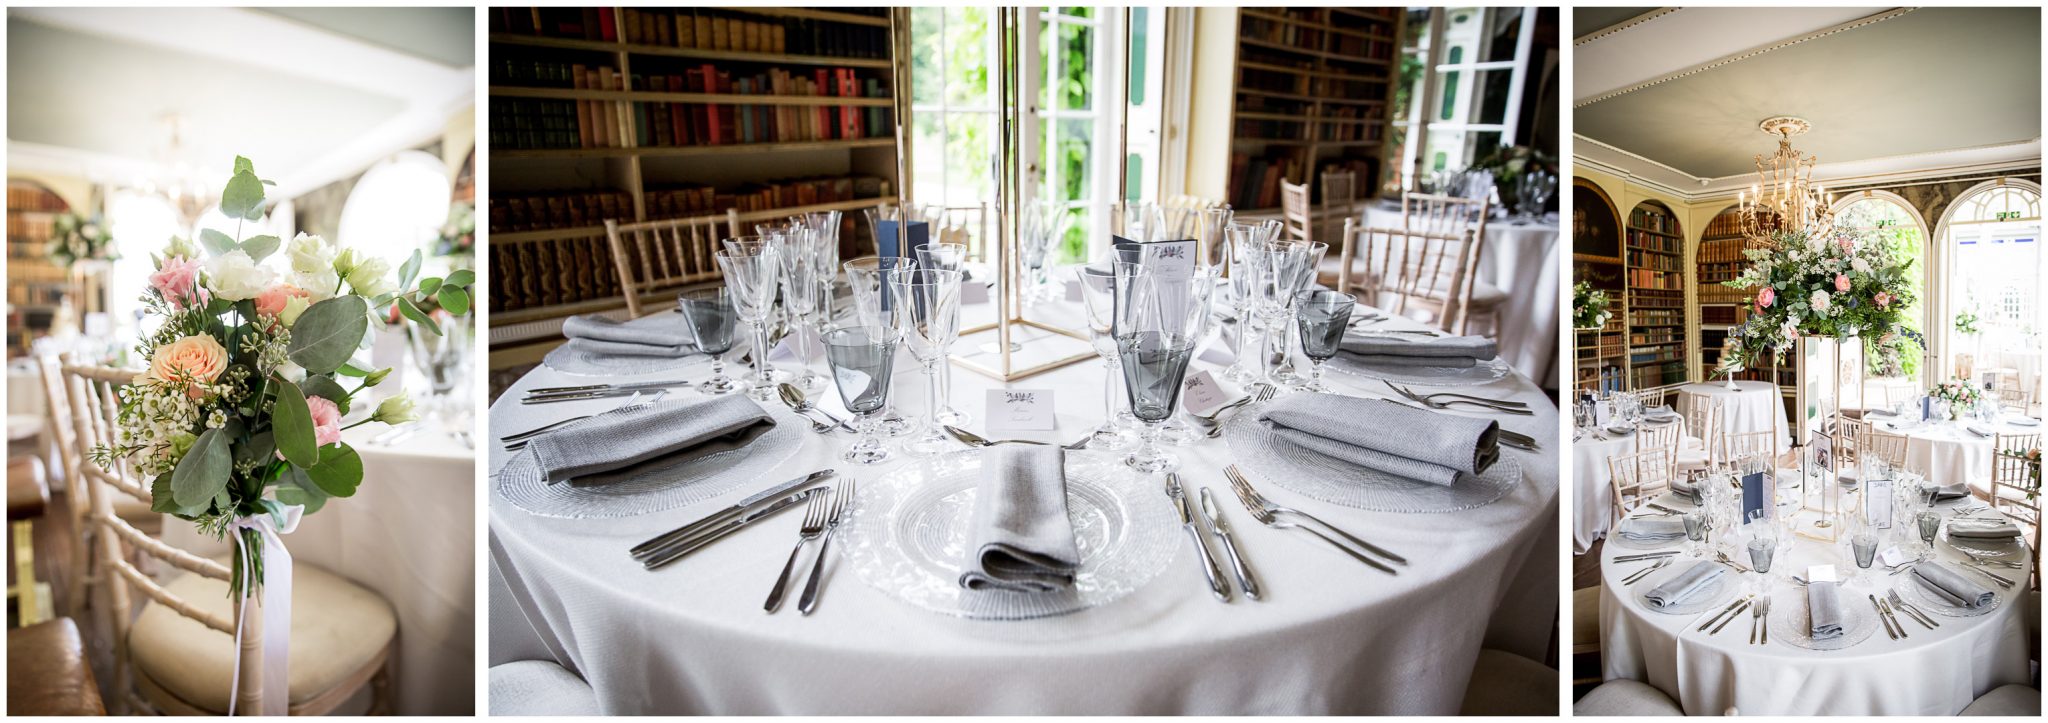 Table set-up for wedding breakfast in Library of Avington Park wedding venue